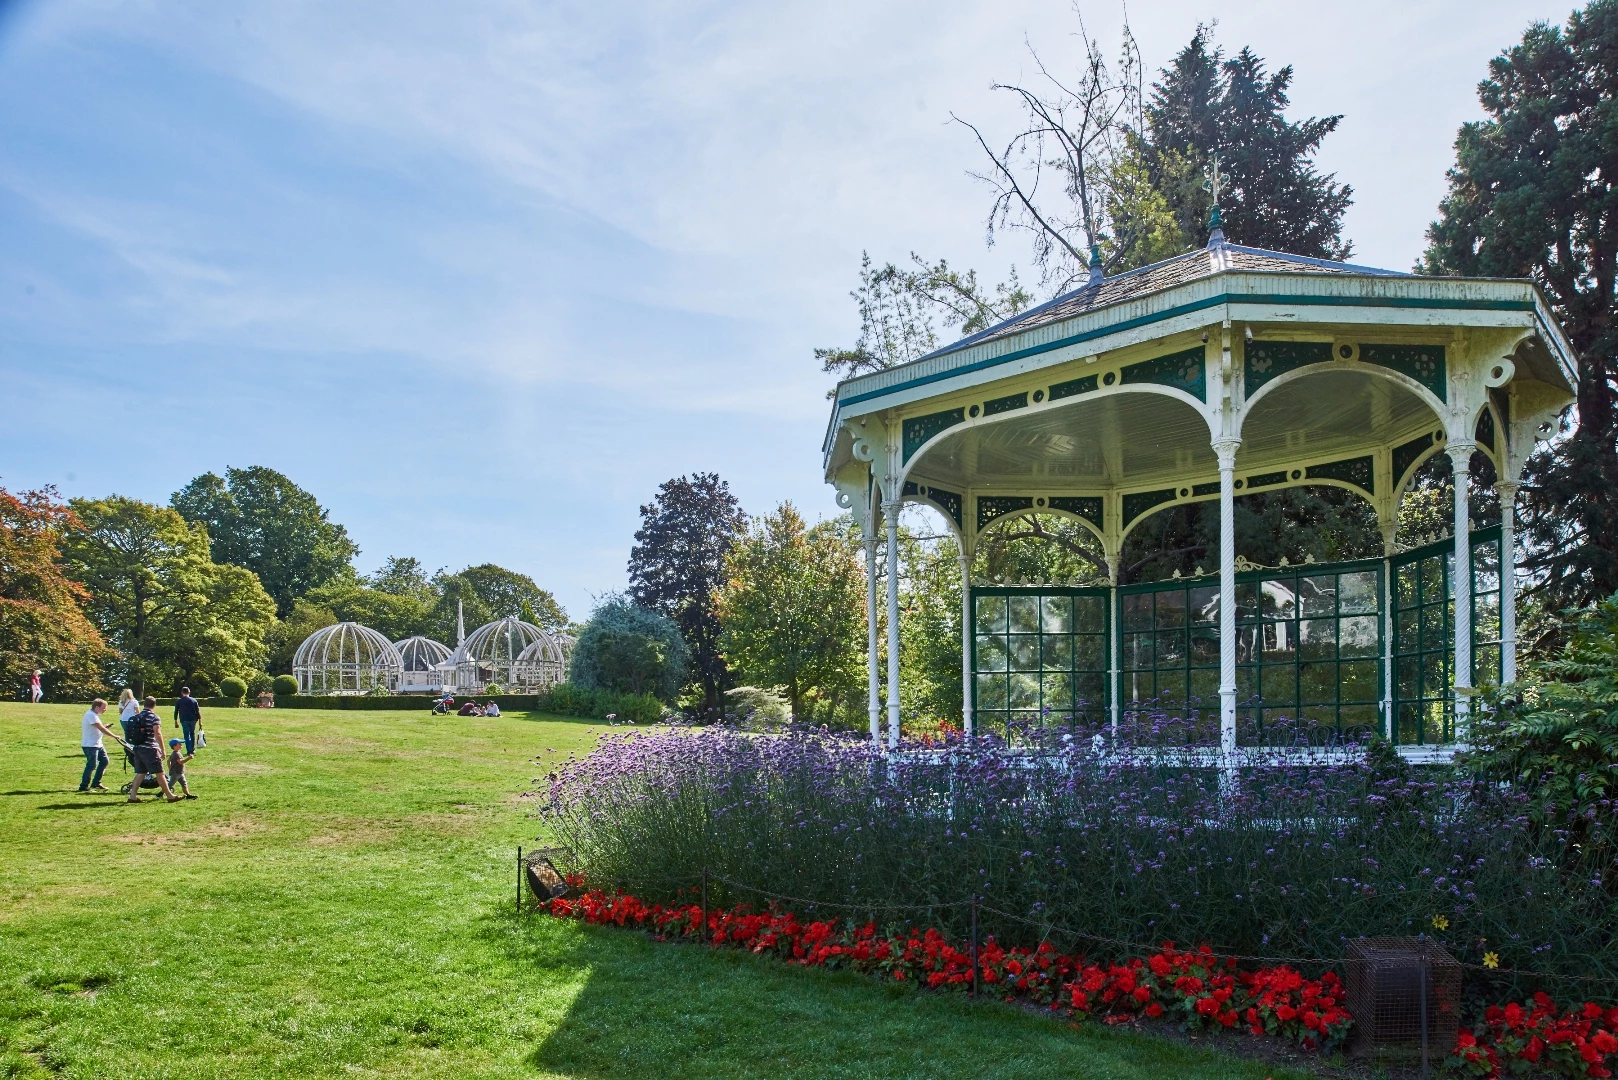 Birmingham Botanical Gardens' bandstand and main lawn